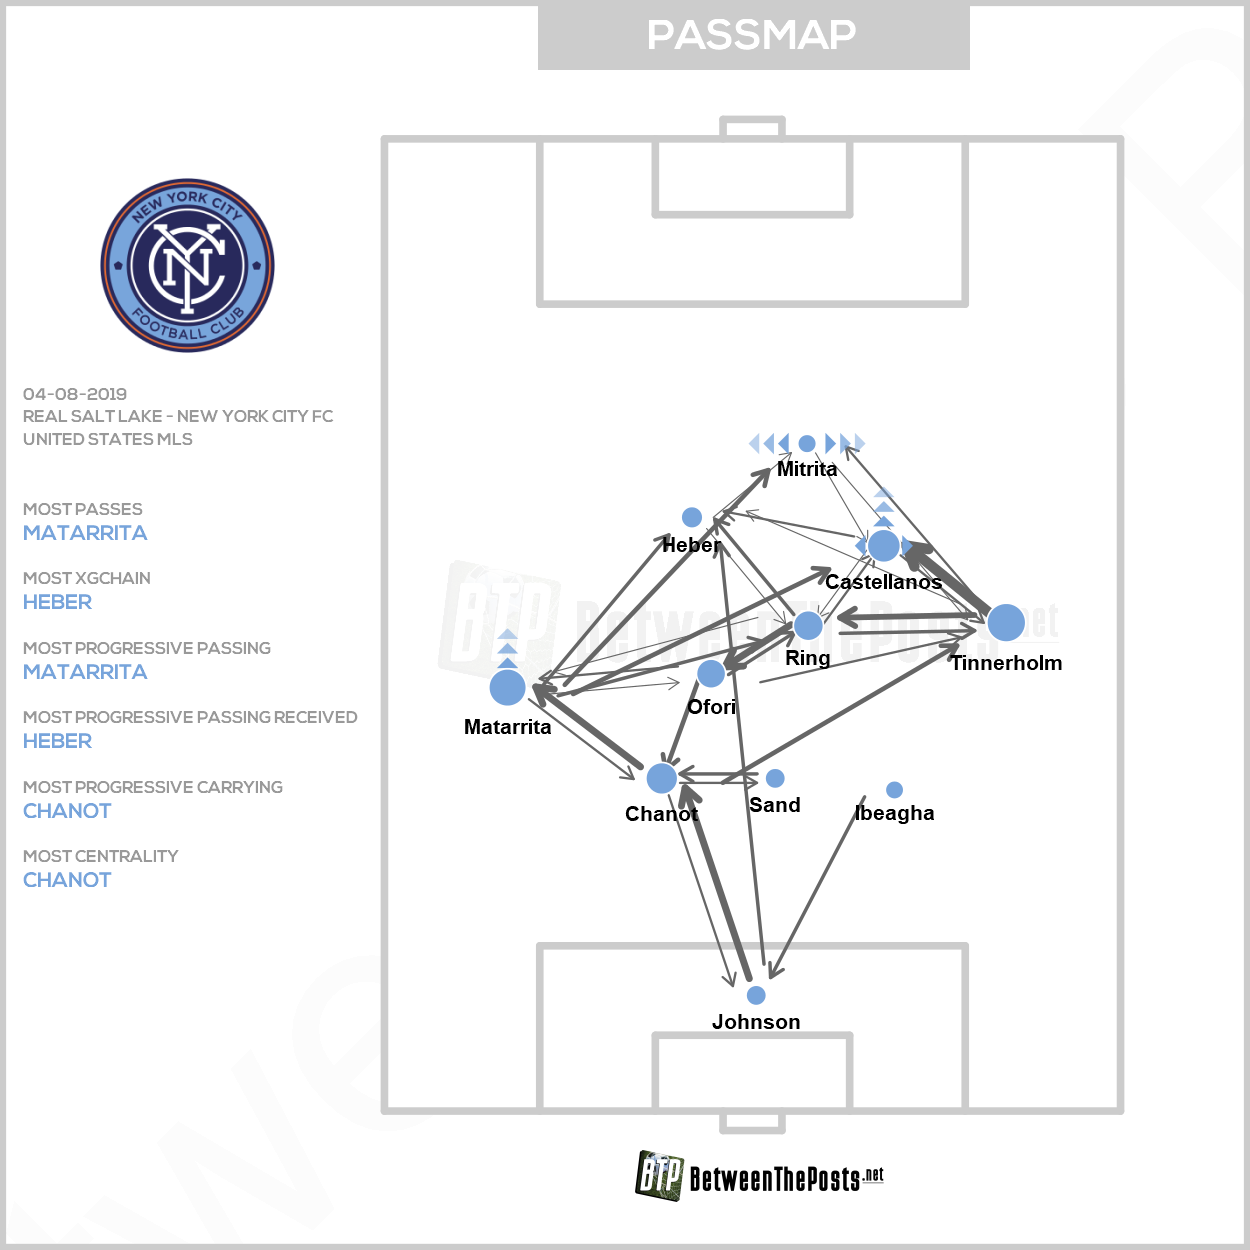 Passmap Real Salt Lake New York City FC 3-1 MLS